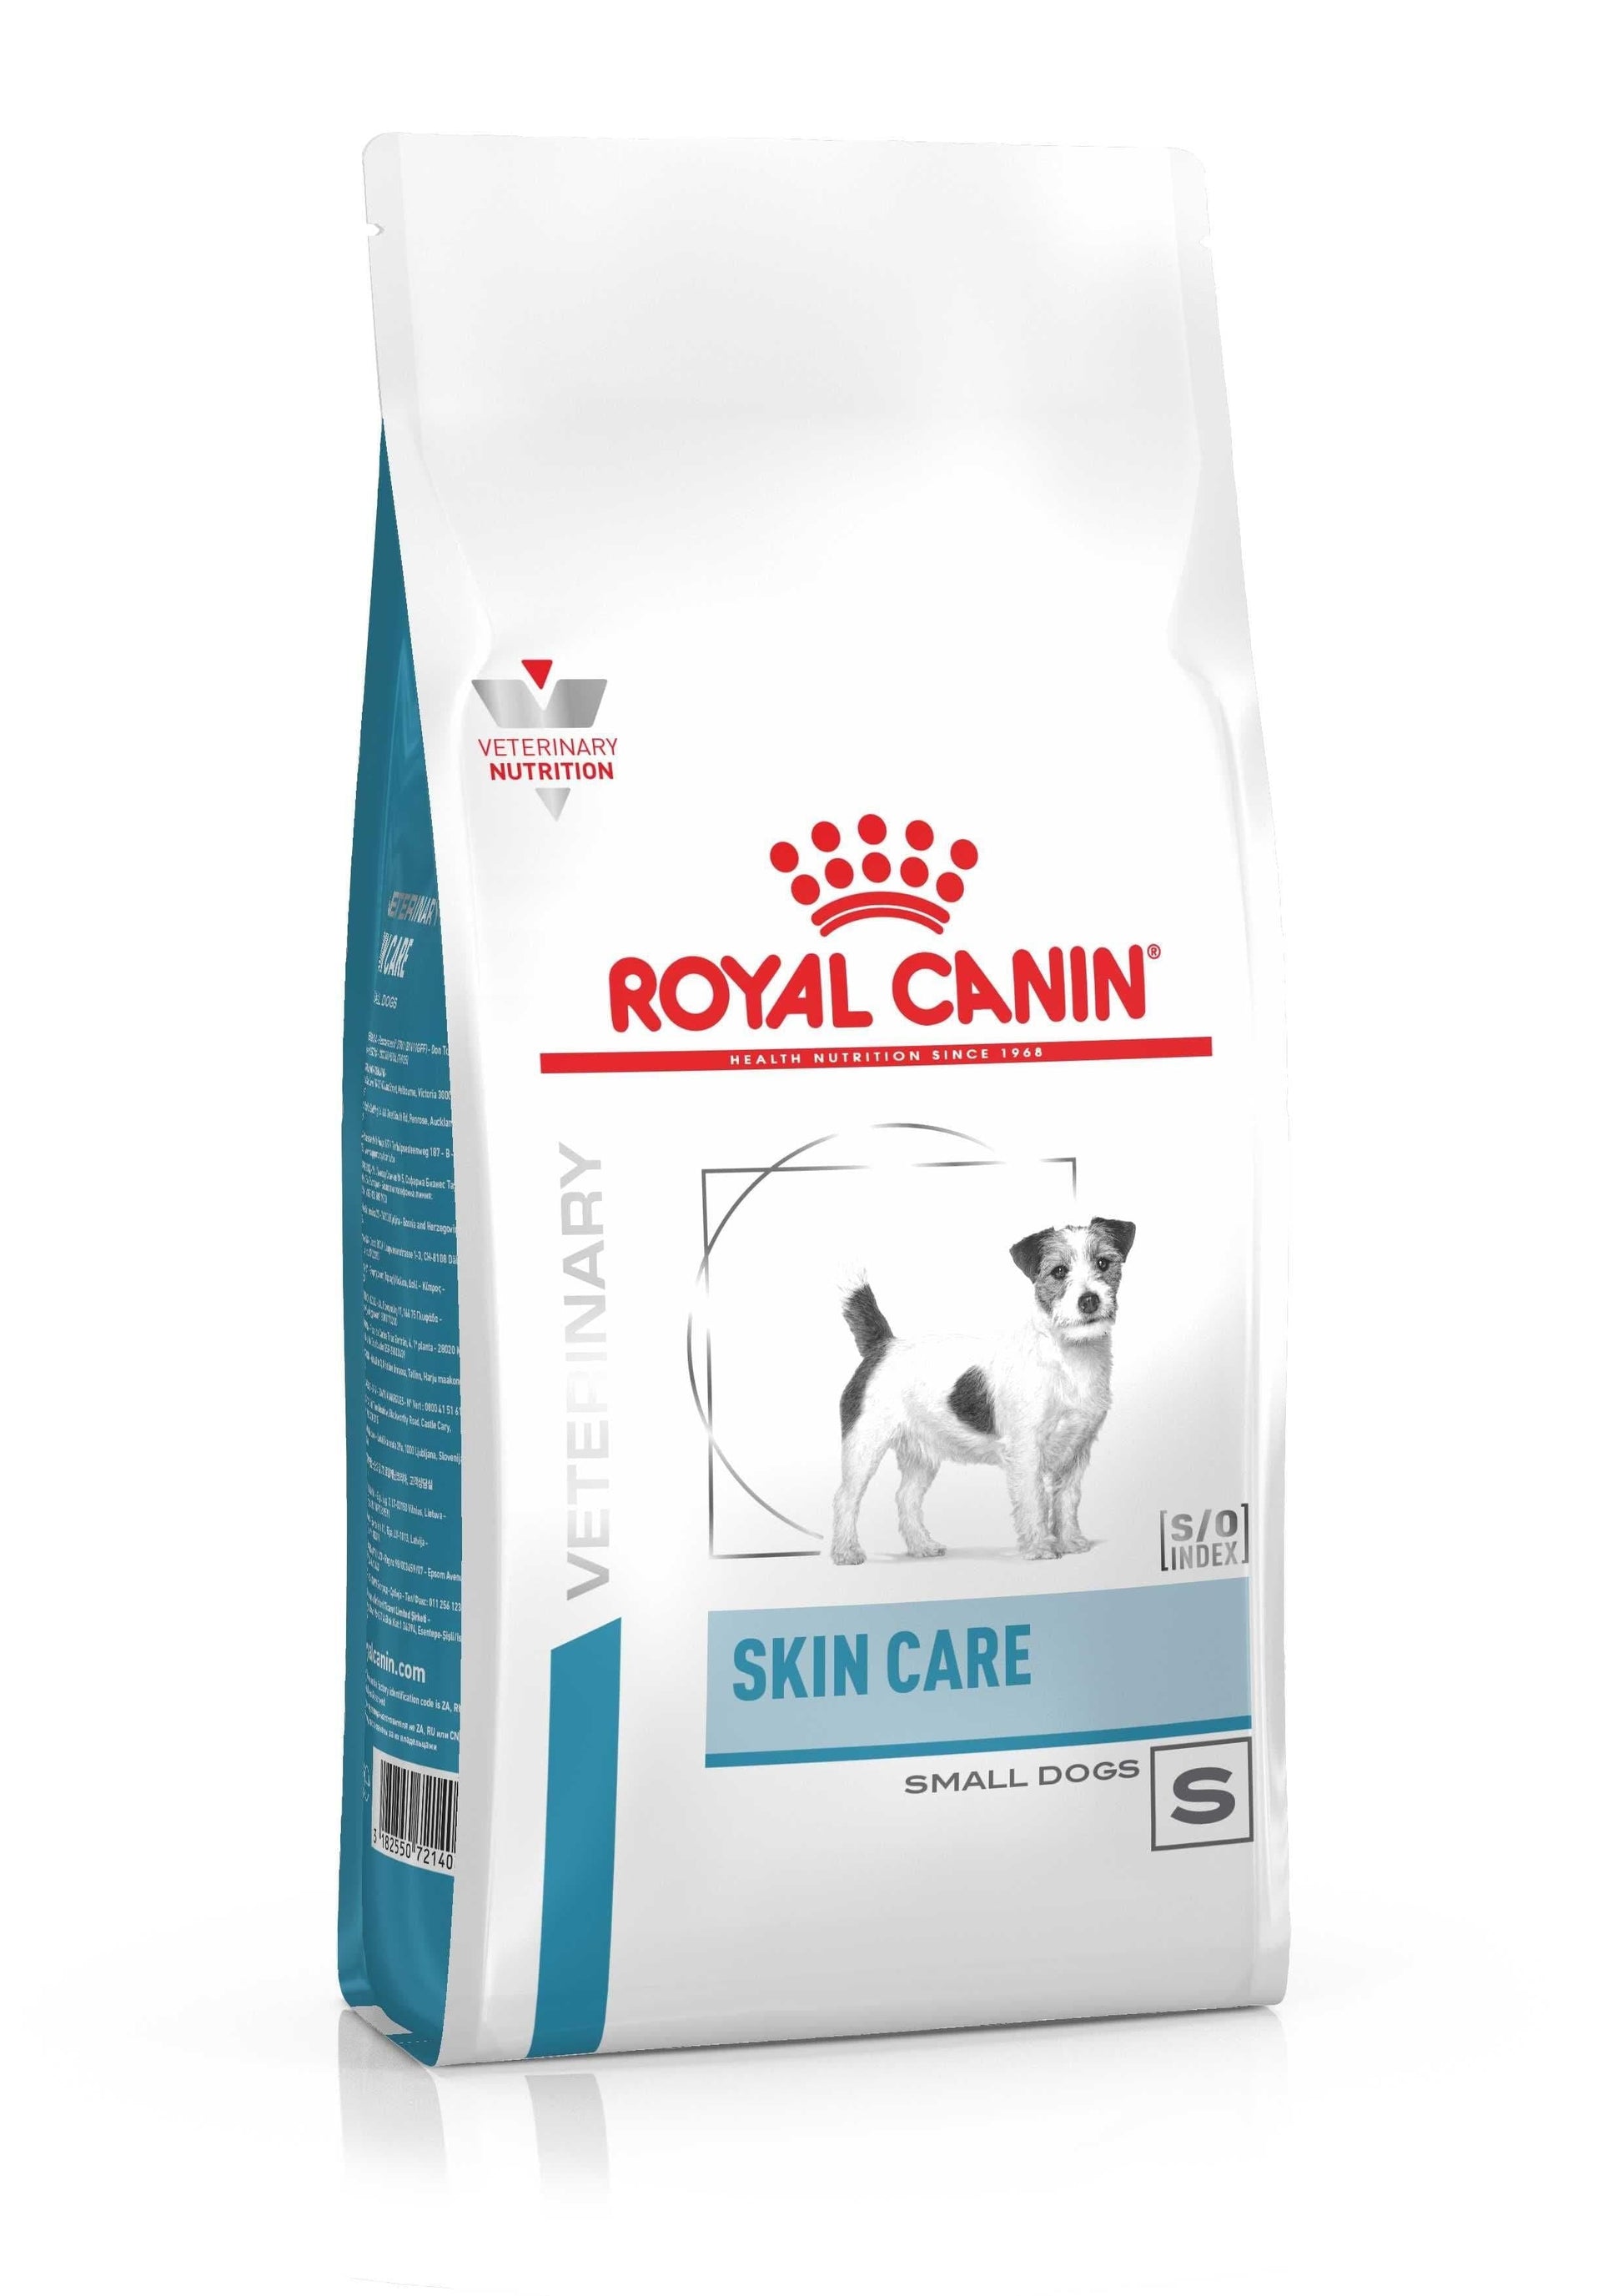 Skin Care small Dog - Royal Canin Veterinary Diet - Alter:Adult, Alter:Senior, Erkrankung:Haut, Futterart:Trocken, Geschmack:hydrolysierte Proteinquelle, Hersteller:Royal Canin Veterinary Diet, Tierart:Hund - Marigin AG Onlineshop für Tierbedarf